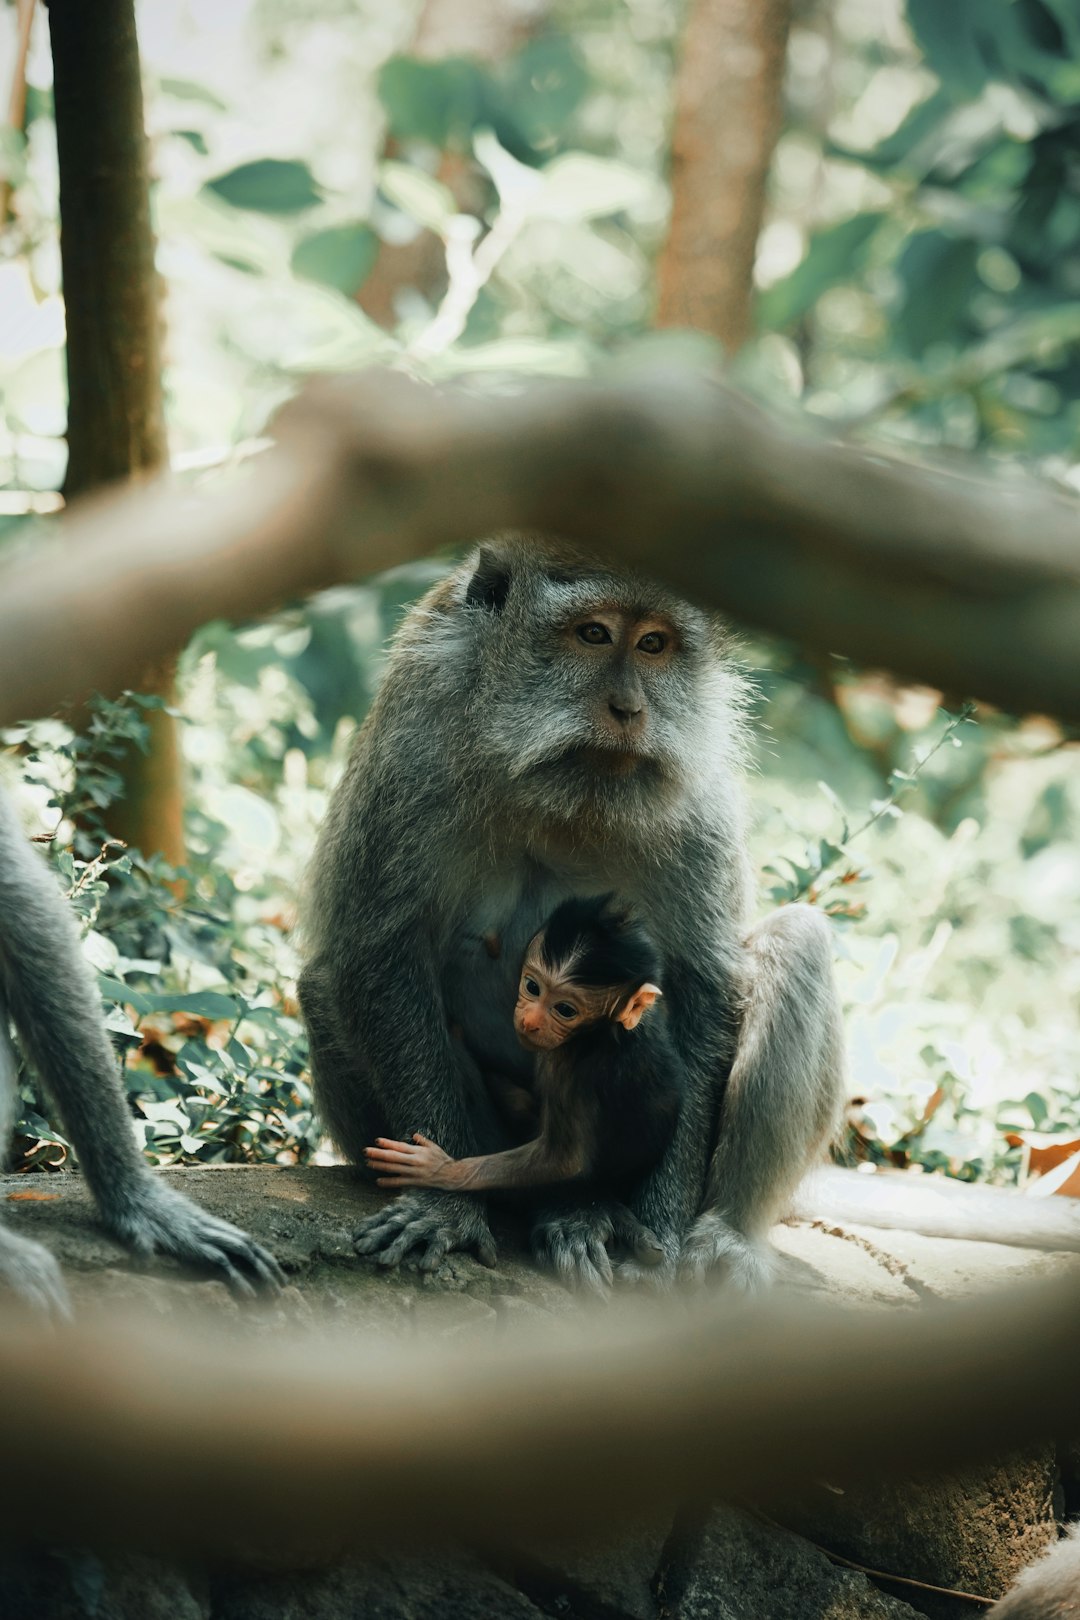 monkey holding on to a baby monkey